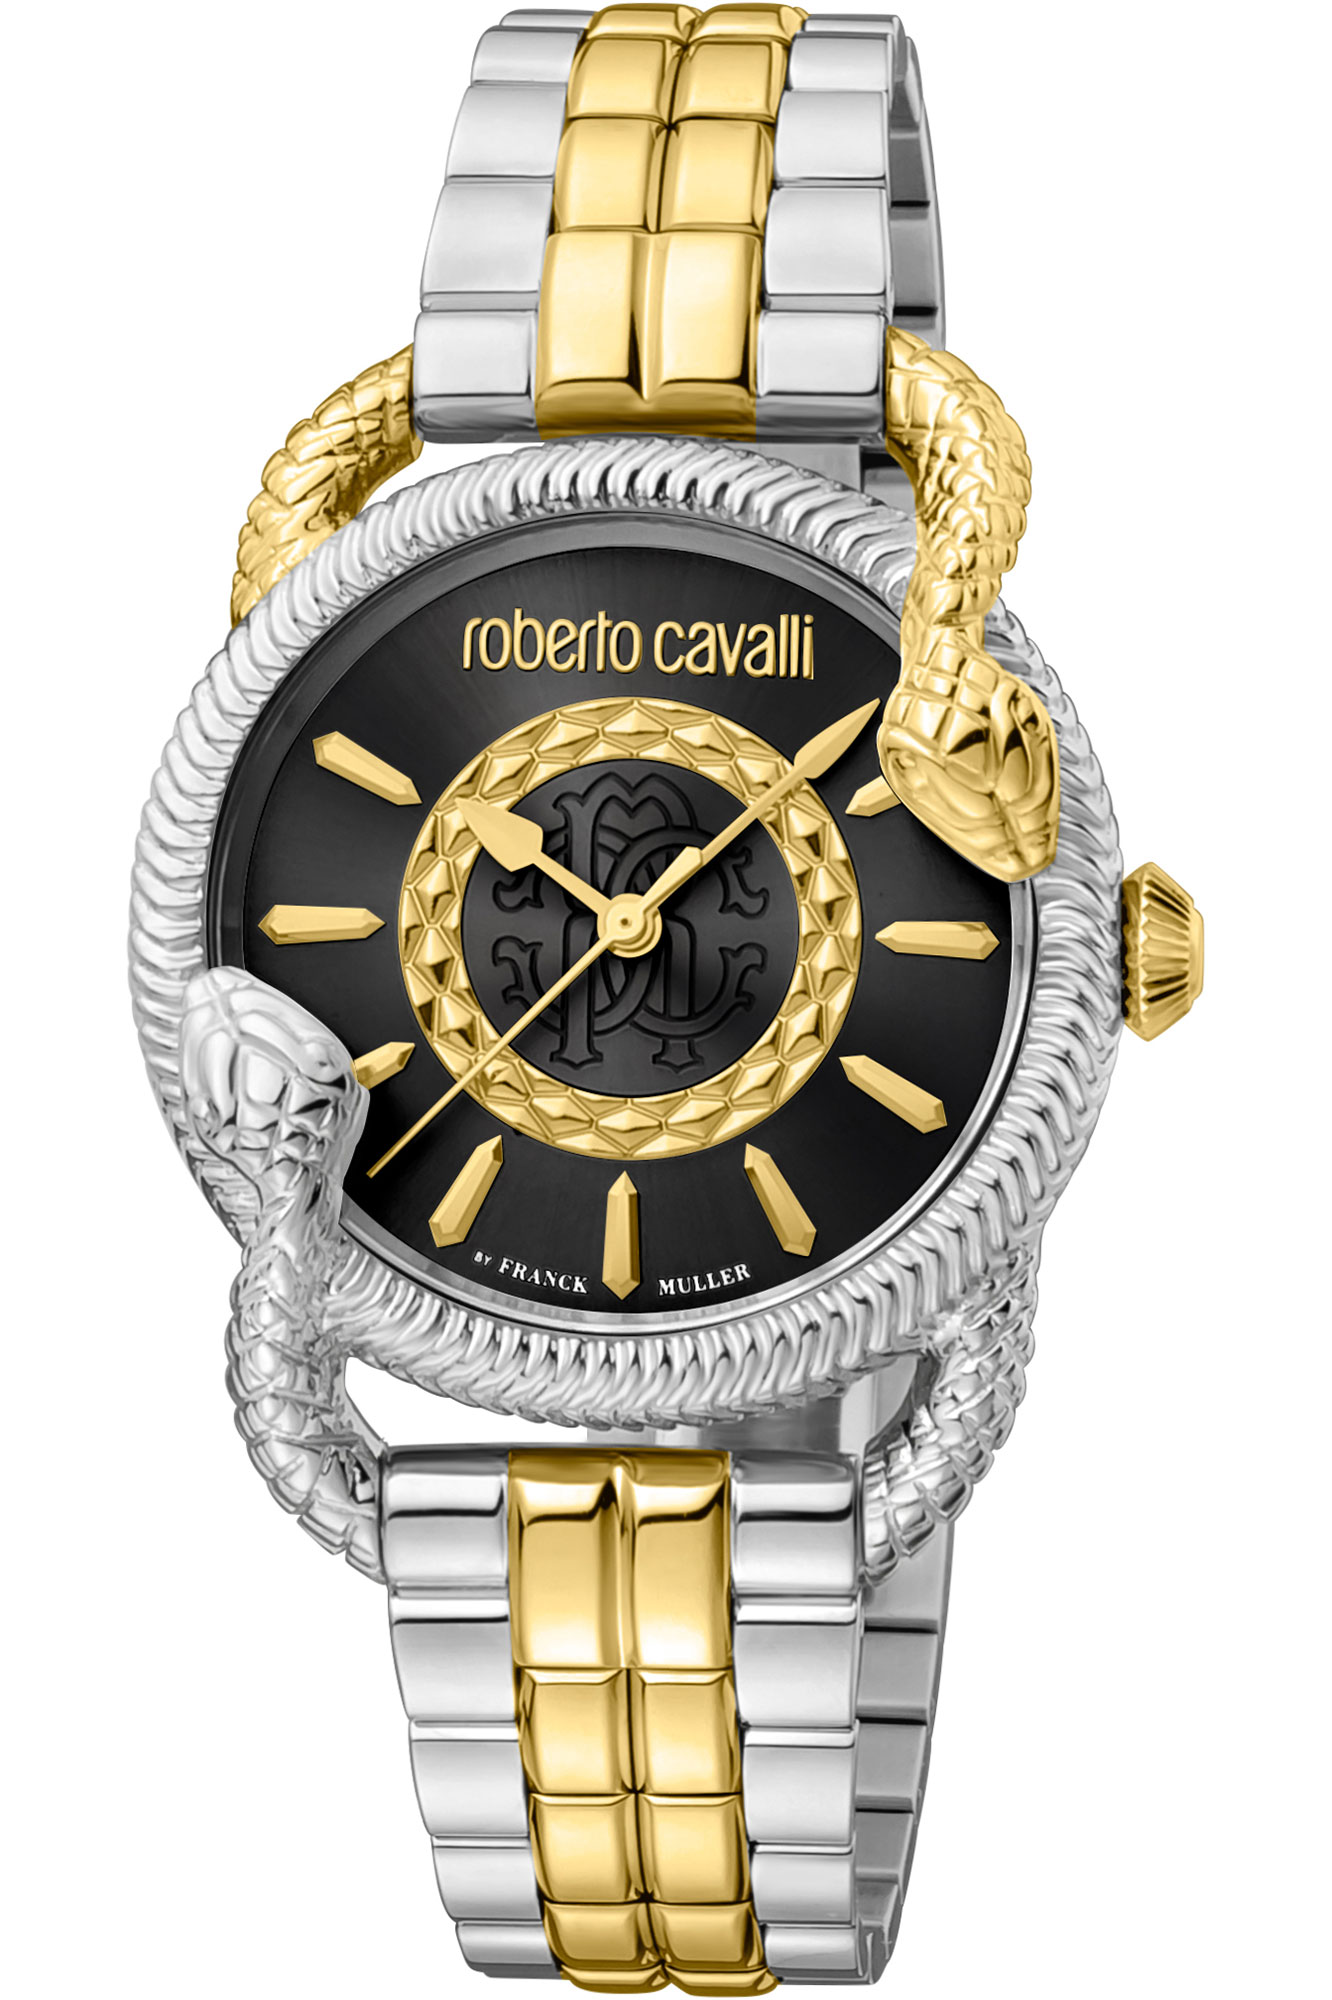 Watch Roberto Cavalli by Franck Muller rv1l126m1061